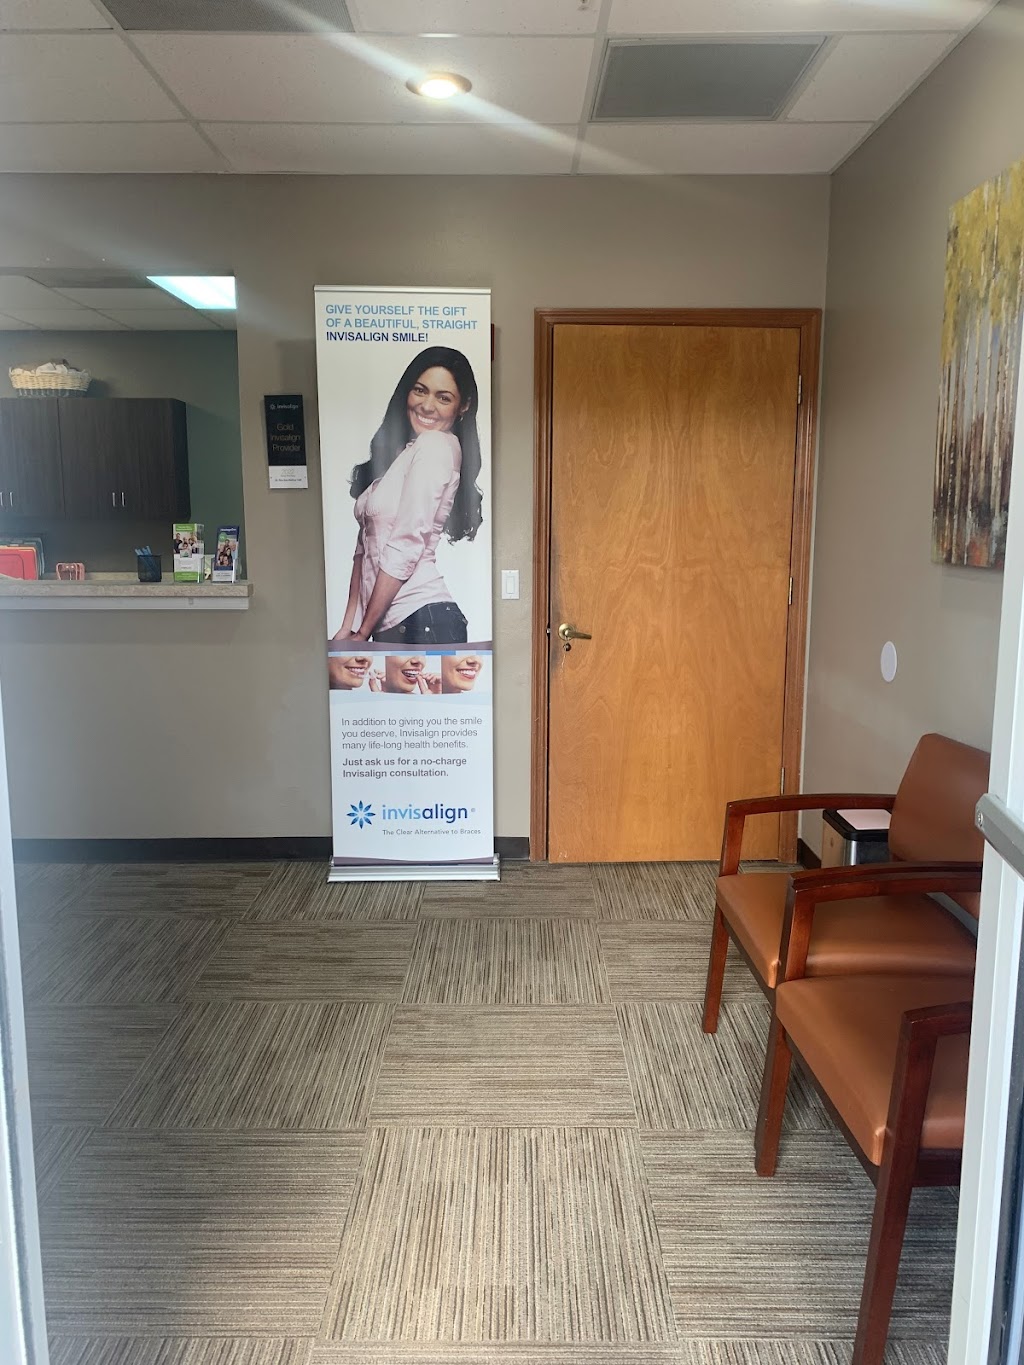 The Dentist Place | 12009 Cortez Blvd, Brooksville, FL 34613, USA | Phone: (352) 596-8988